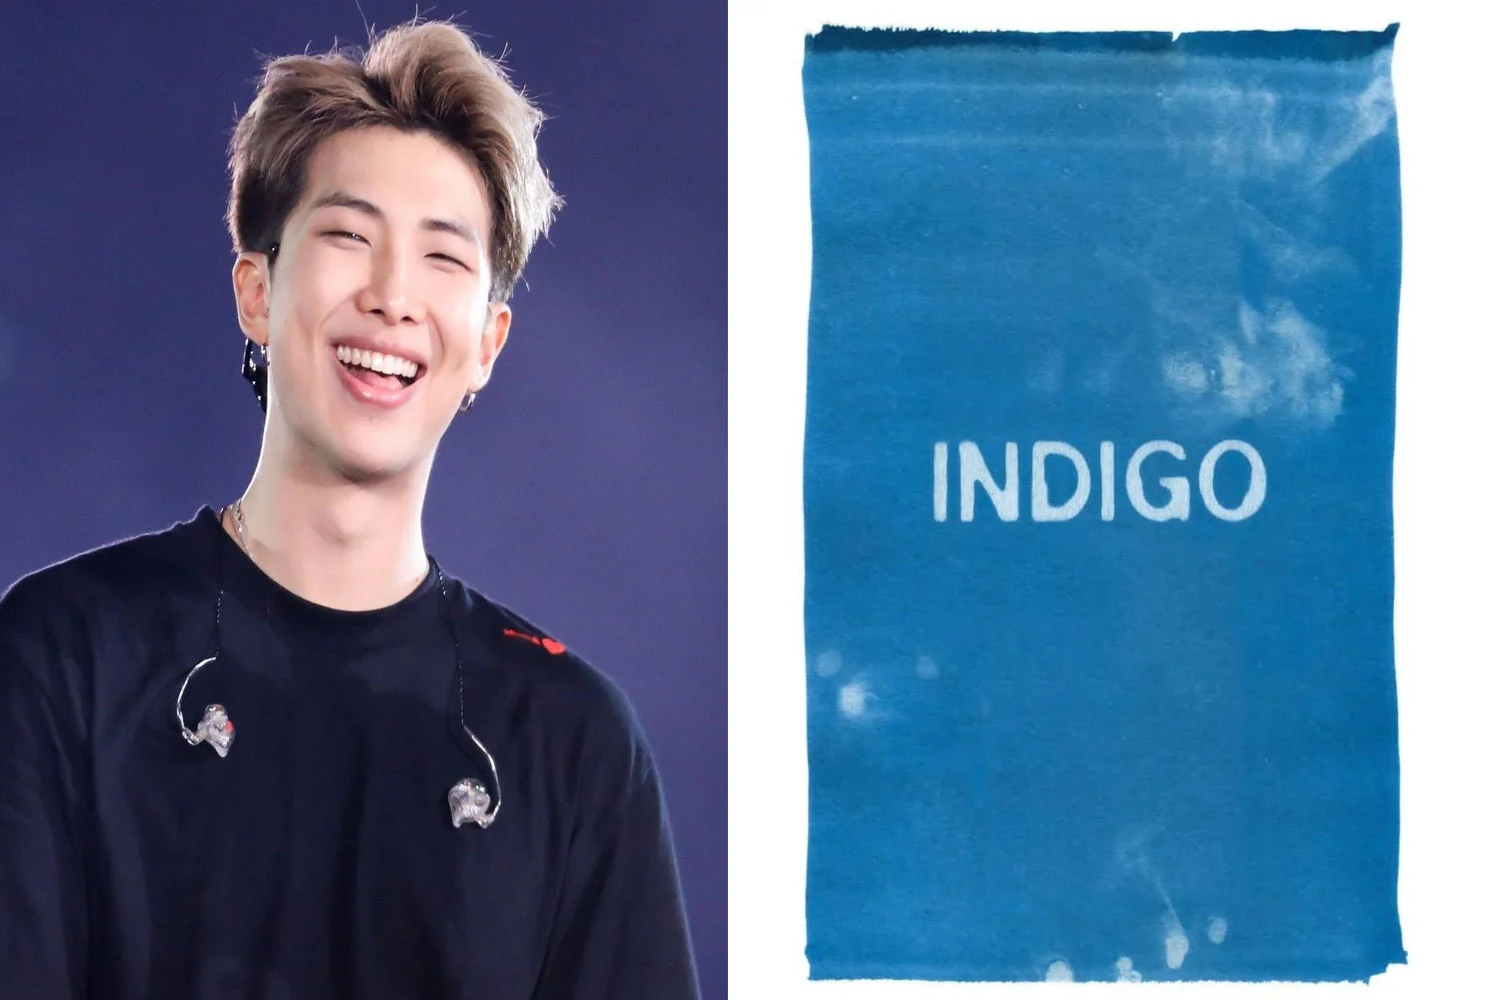 BTS' RM Releases His First Solo Album 'Indigo'